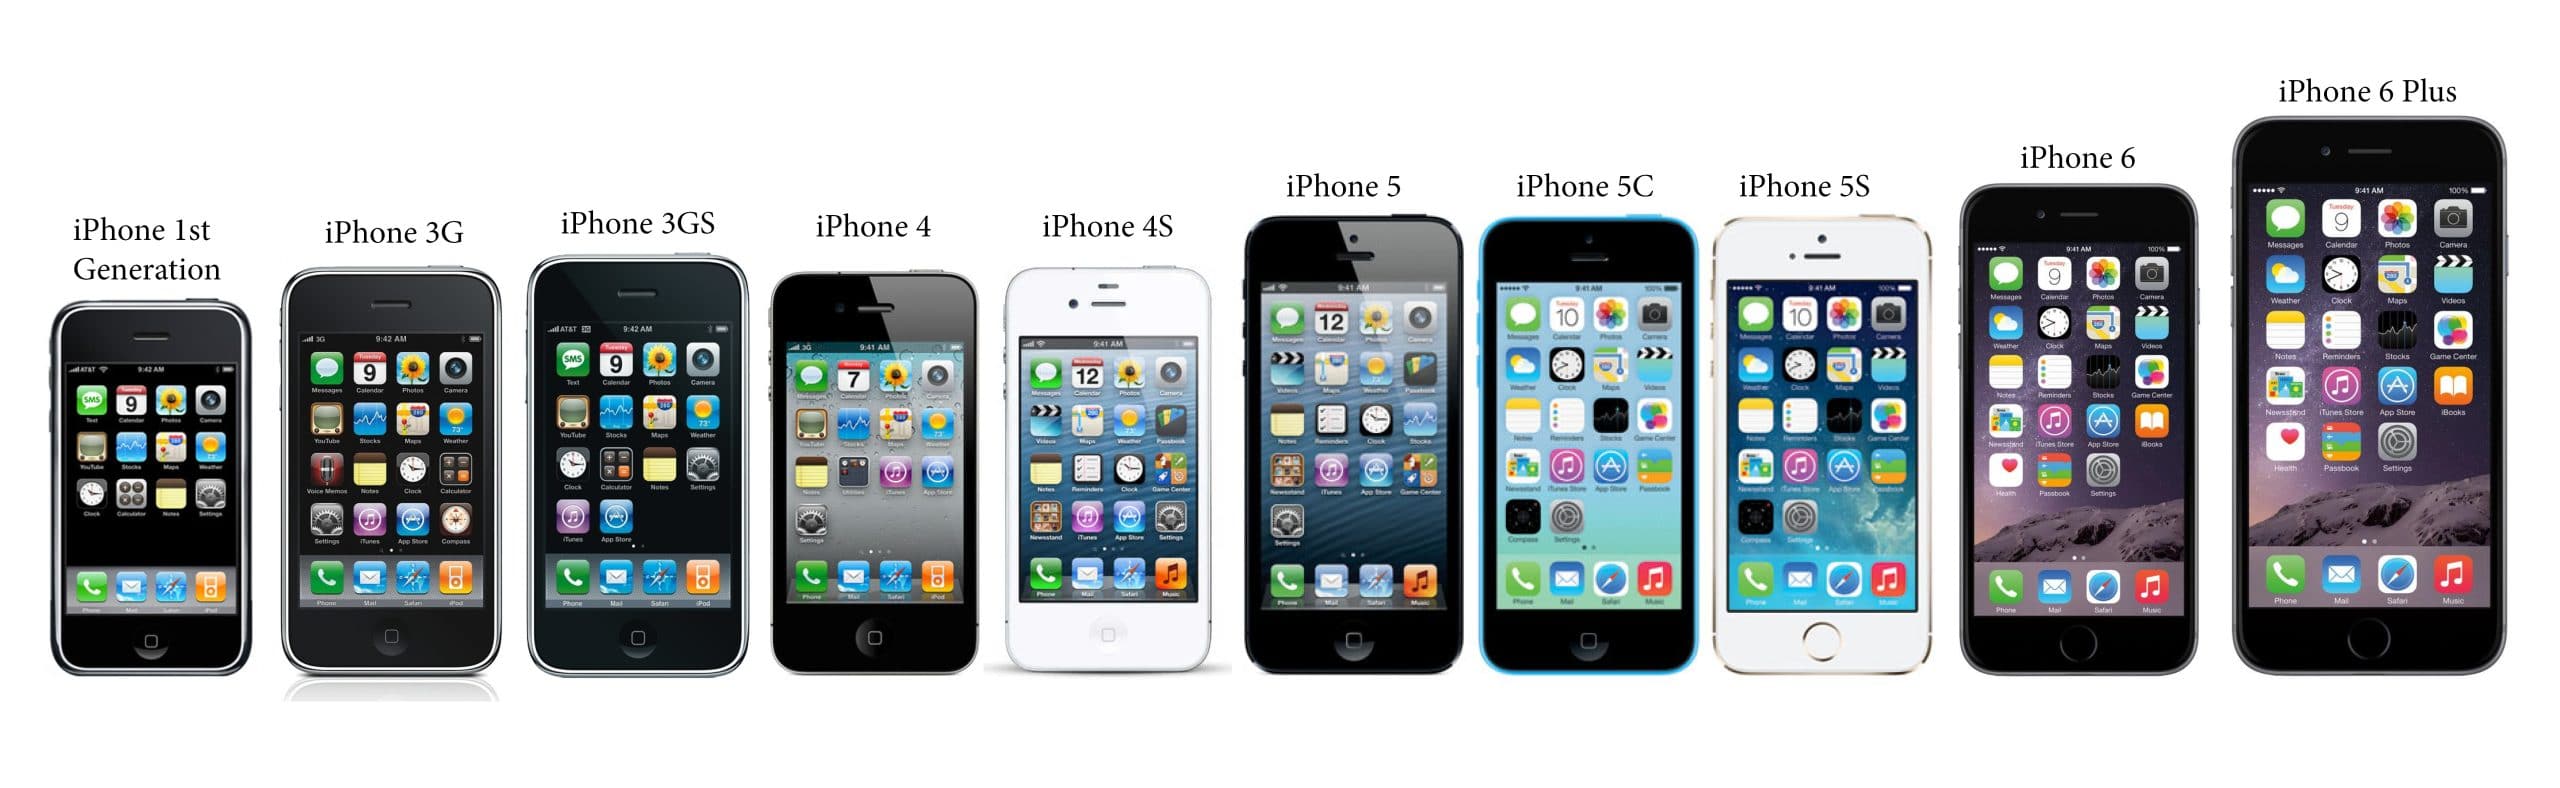 إنفوجرافيك مراحل تطور الأيفون Infographic: The Evolution of iPhone